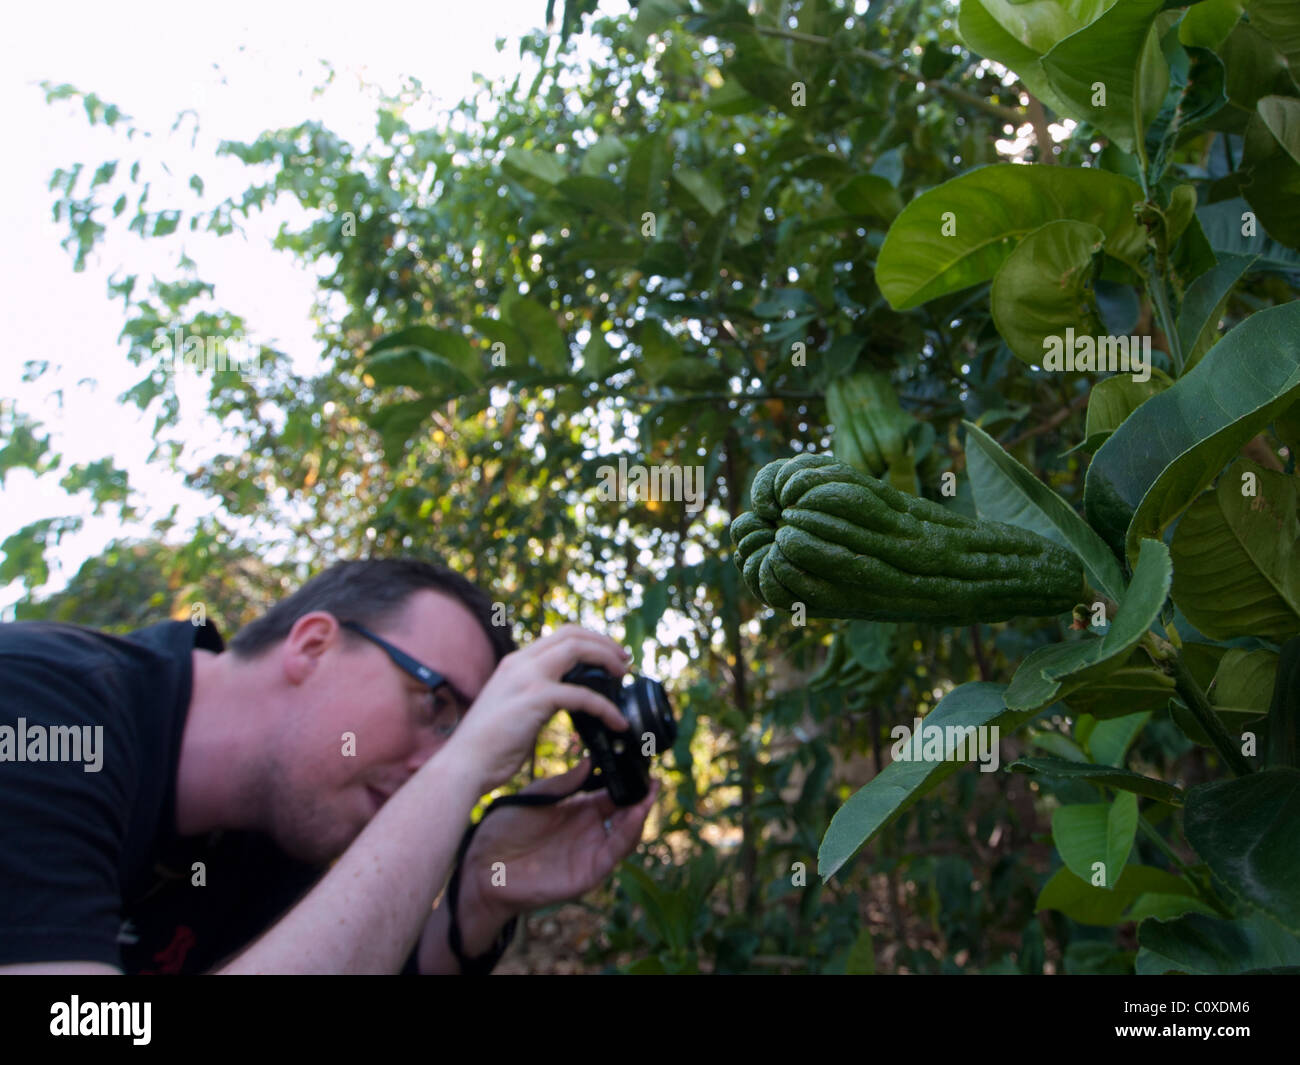 An Eco friendly photographer tour at fruit garden Stock Photo